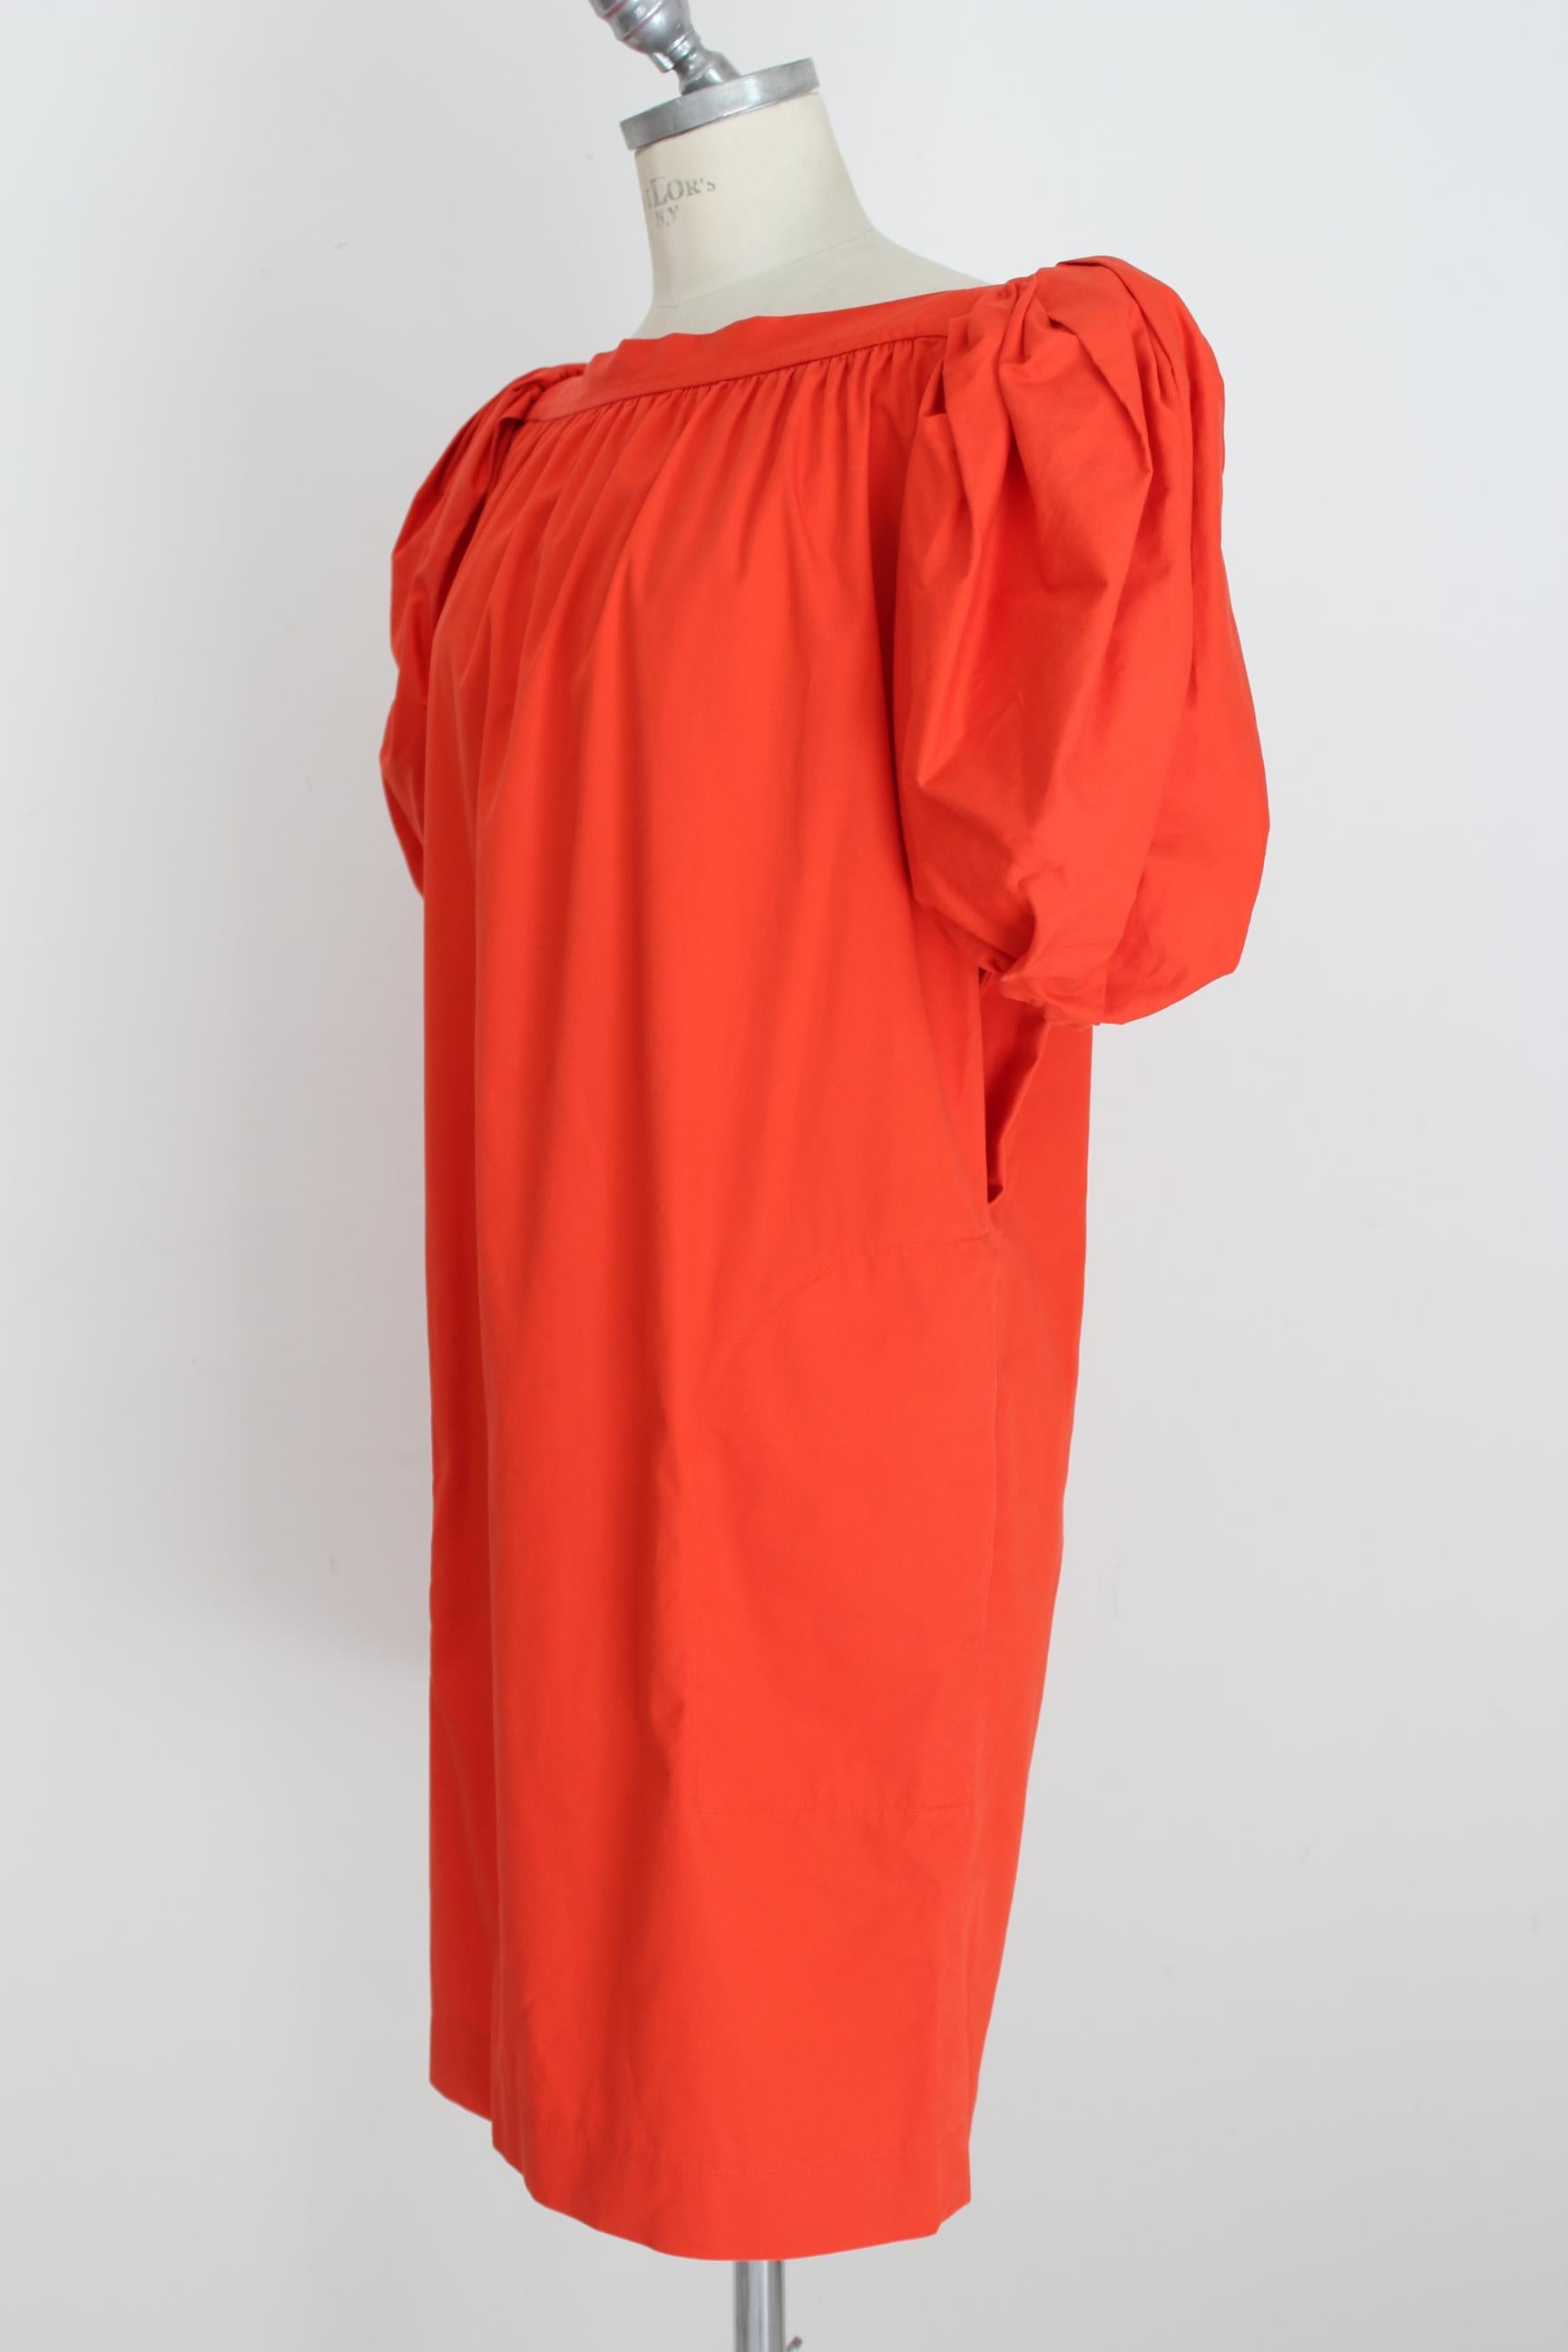 Women's Yves Saint Laurent Rive Gauche Red Cotton Straight Cocktail Dress 1980s